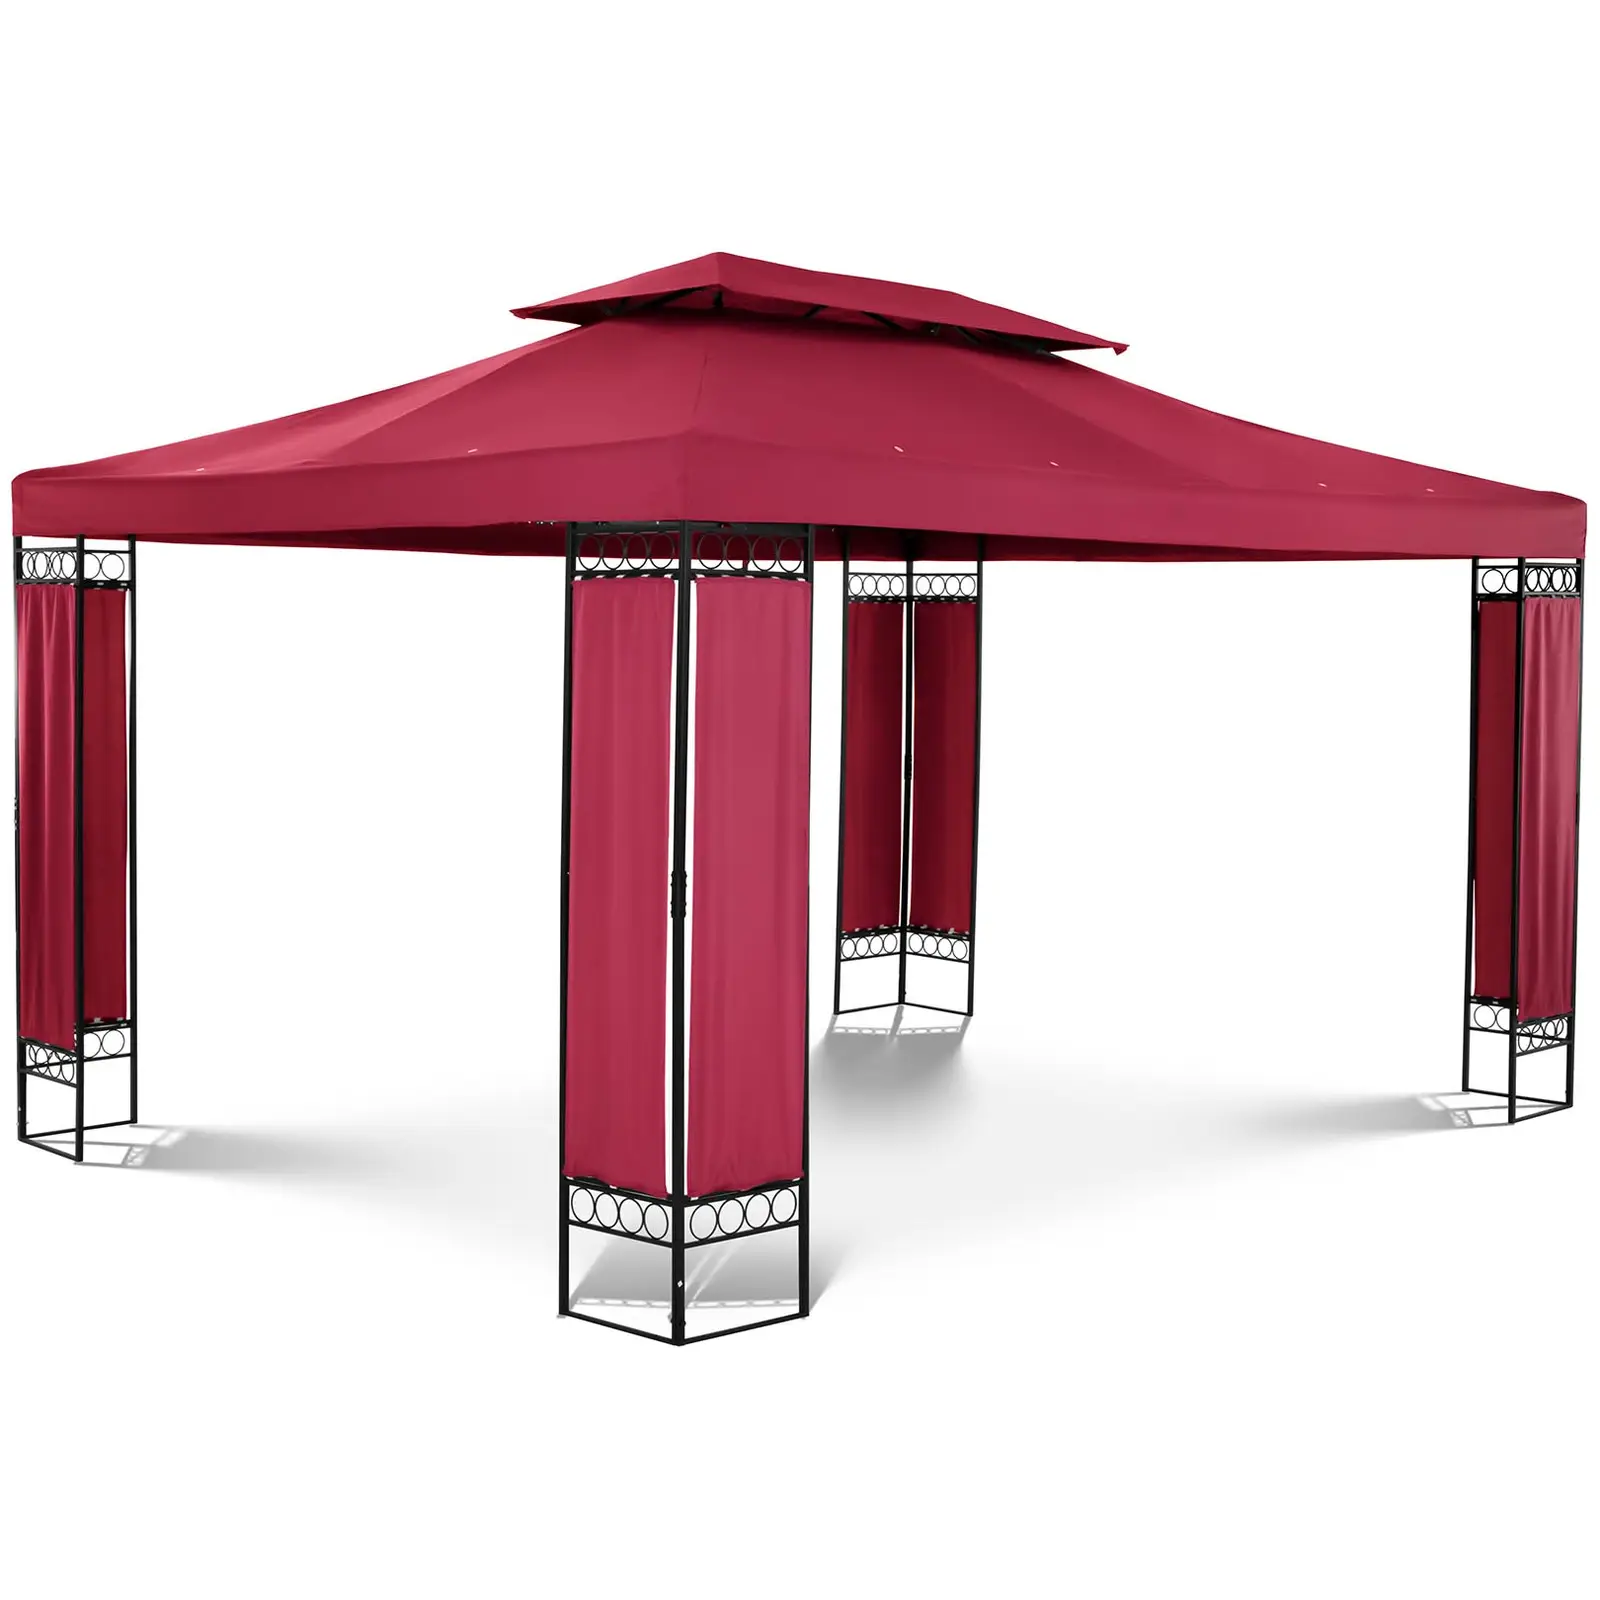 Telt-pavillon - 3 x 4 m - 160 g/m² - vinrød